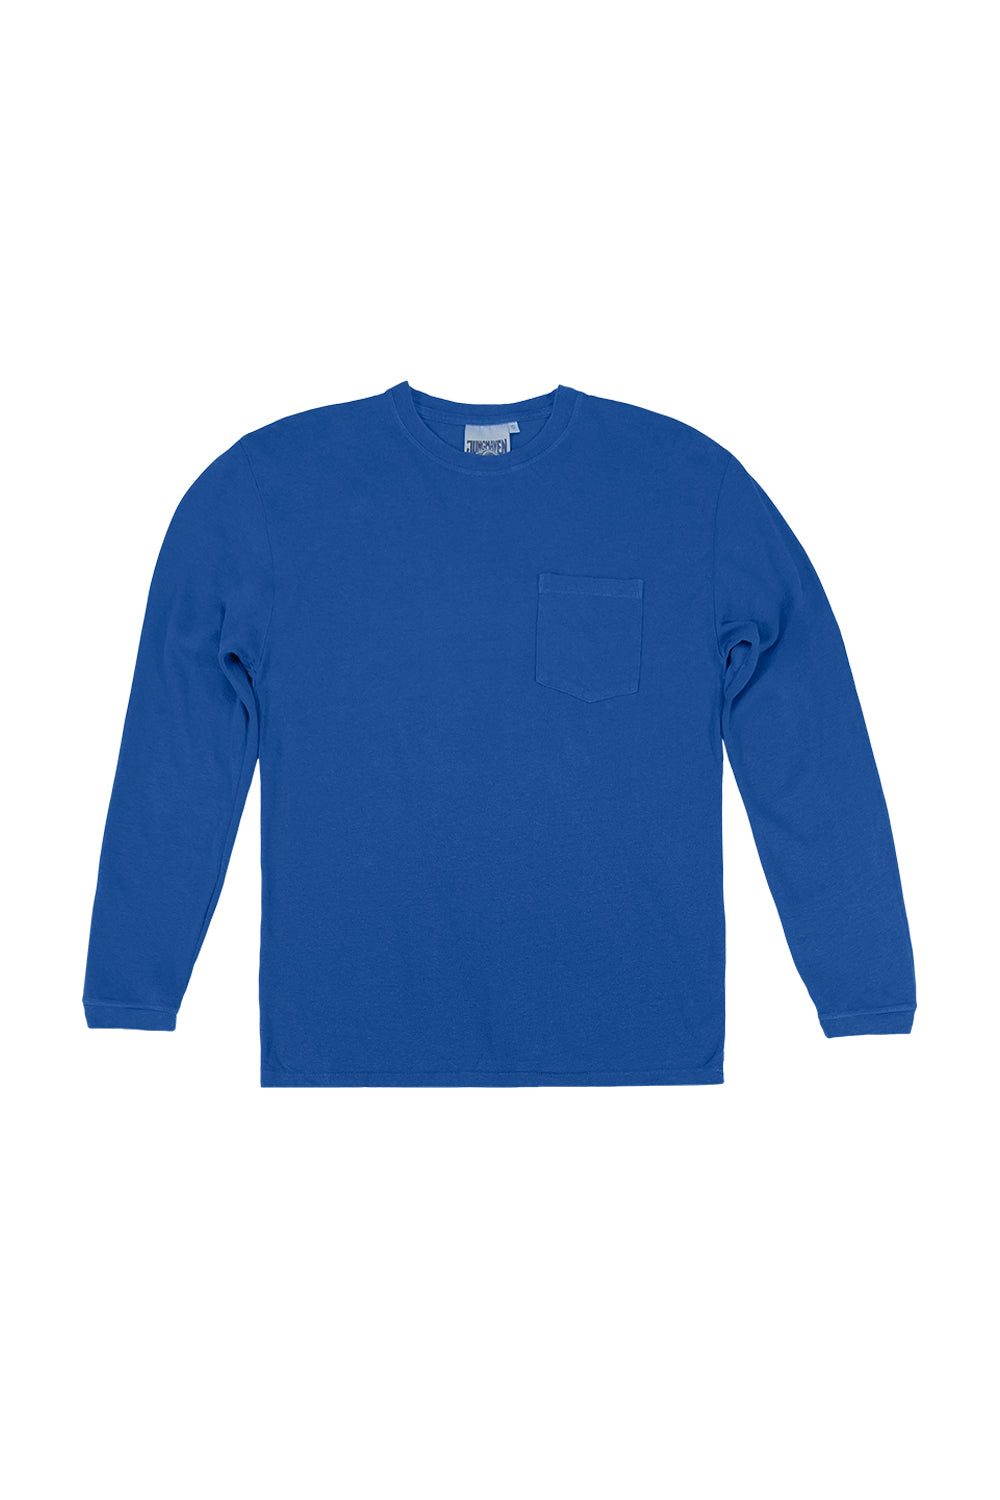 Baja Long Sleeve Pocket Tee | Jungmaven Hemp Clothing & Accessories / Color: Galaxy Blue